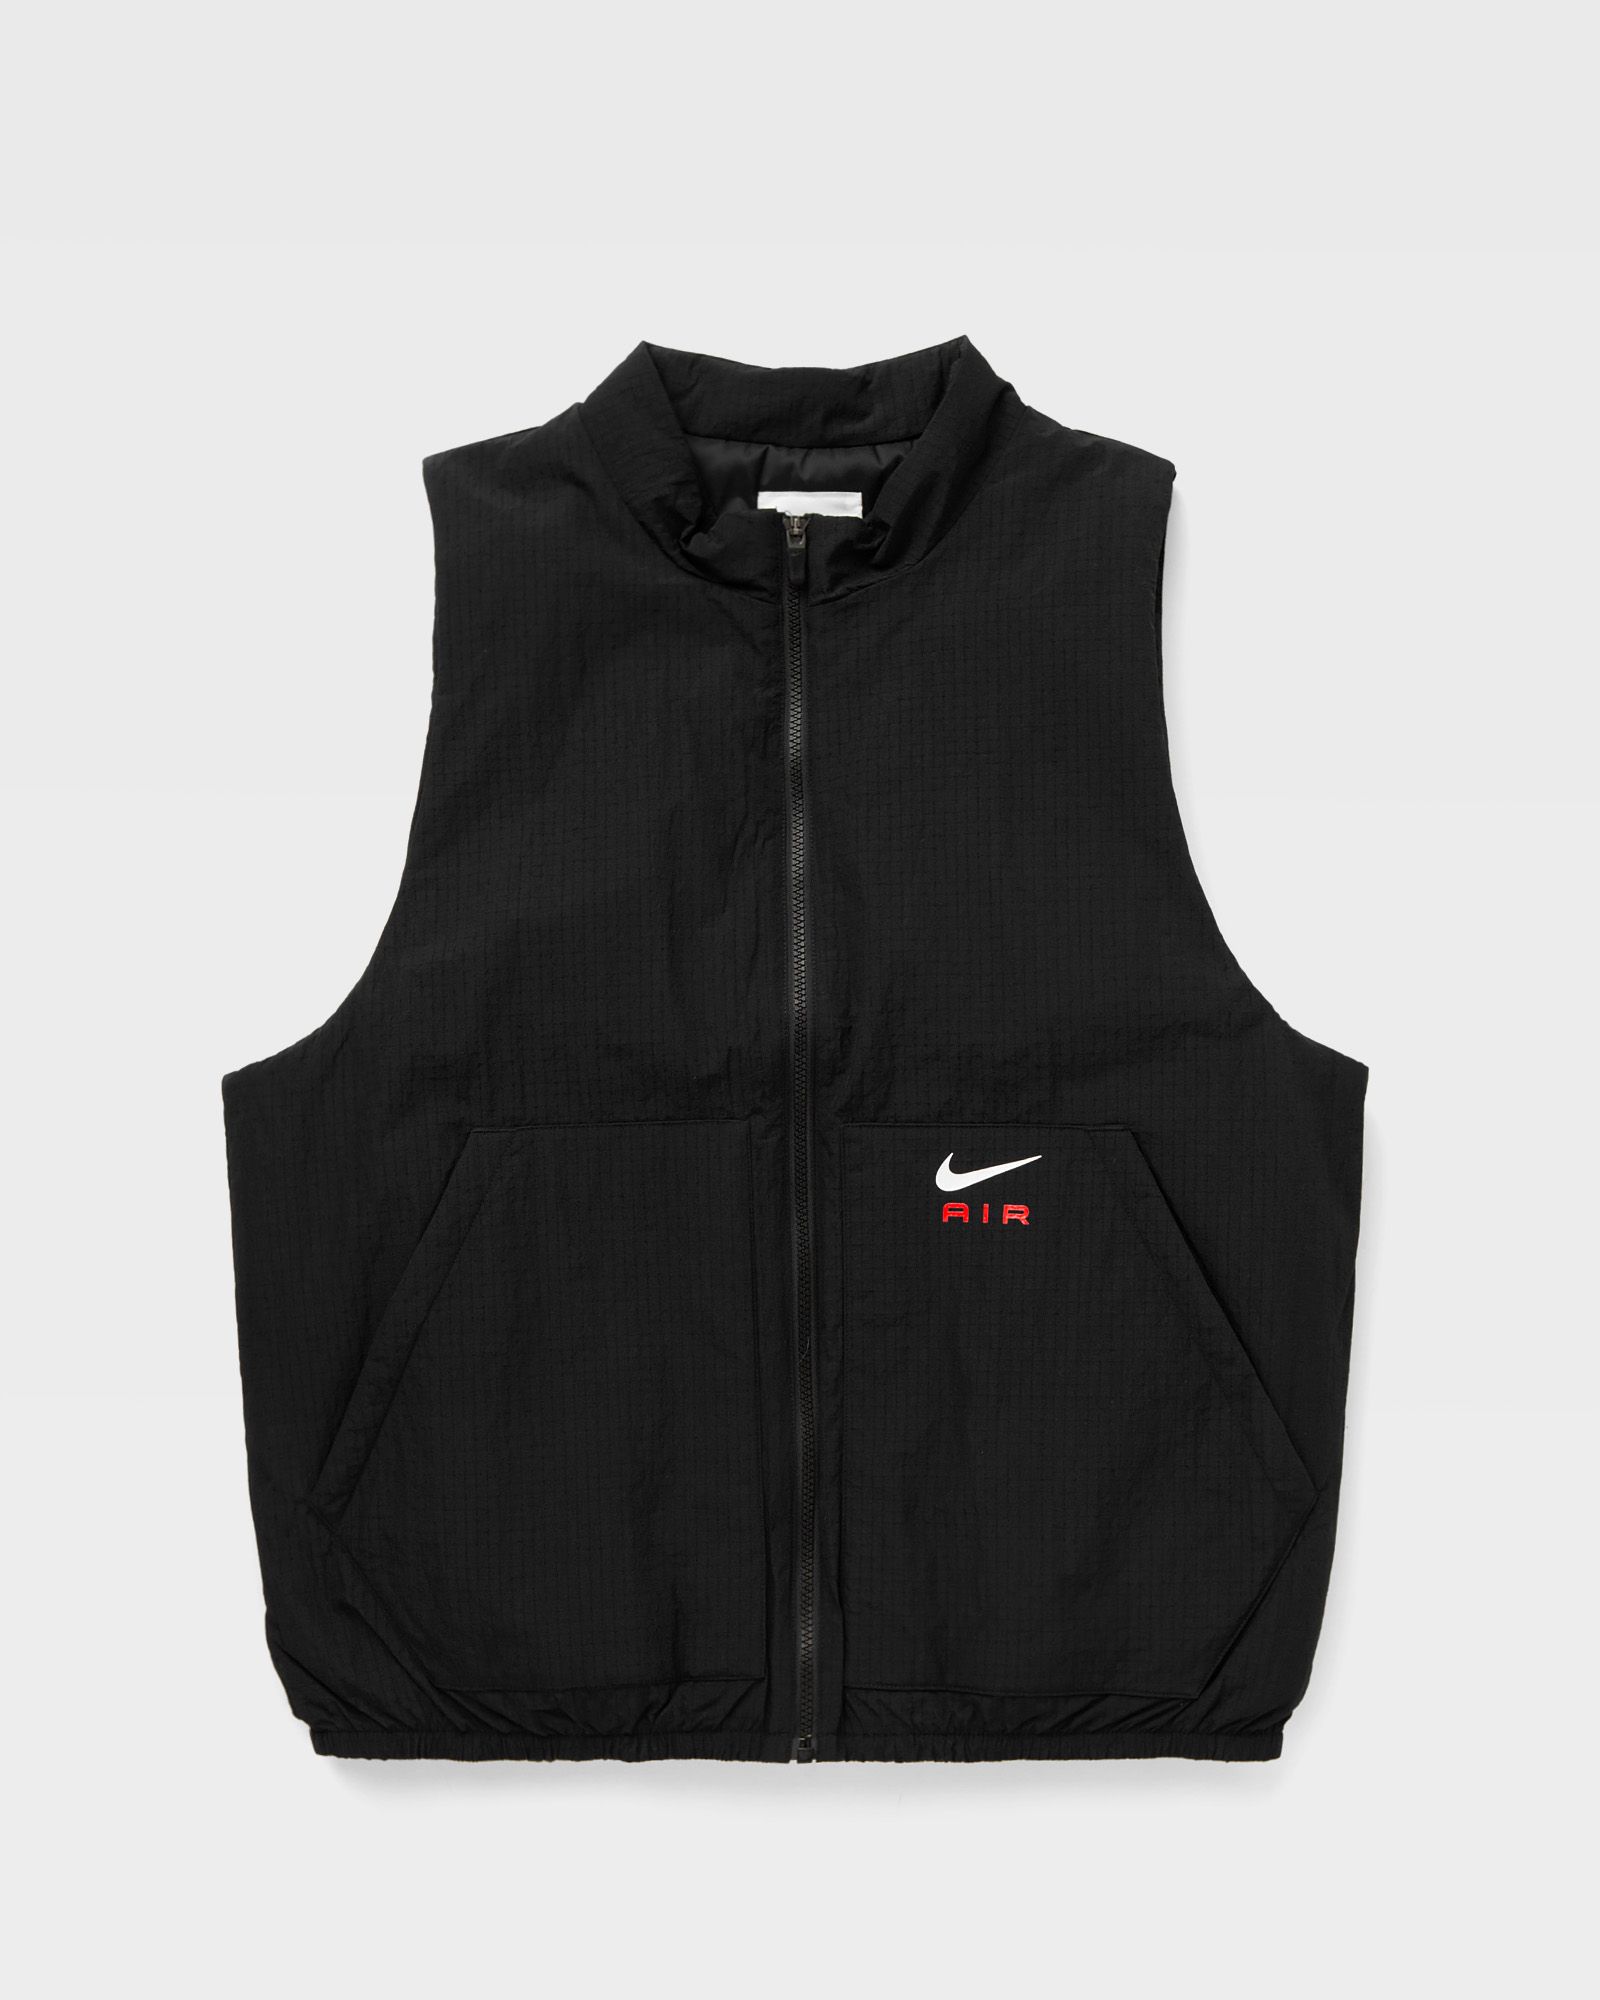 Nike - air insulated woven vest men vests black in größe:xxl